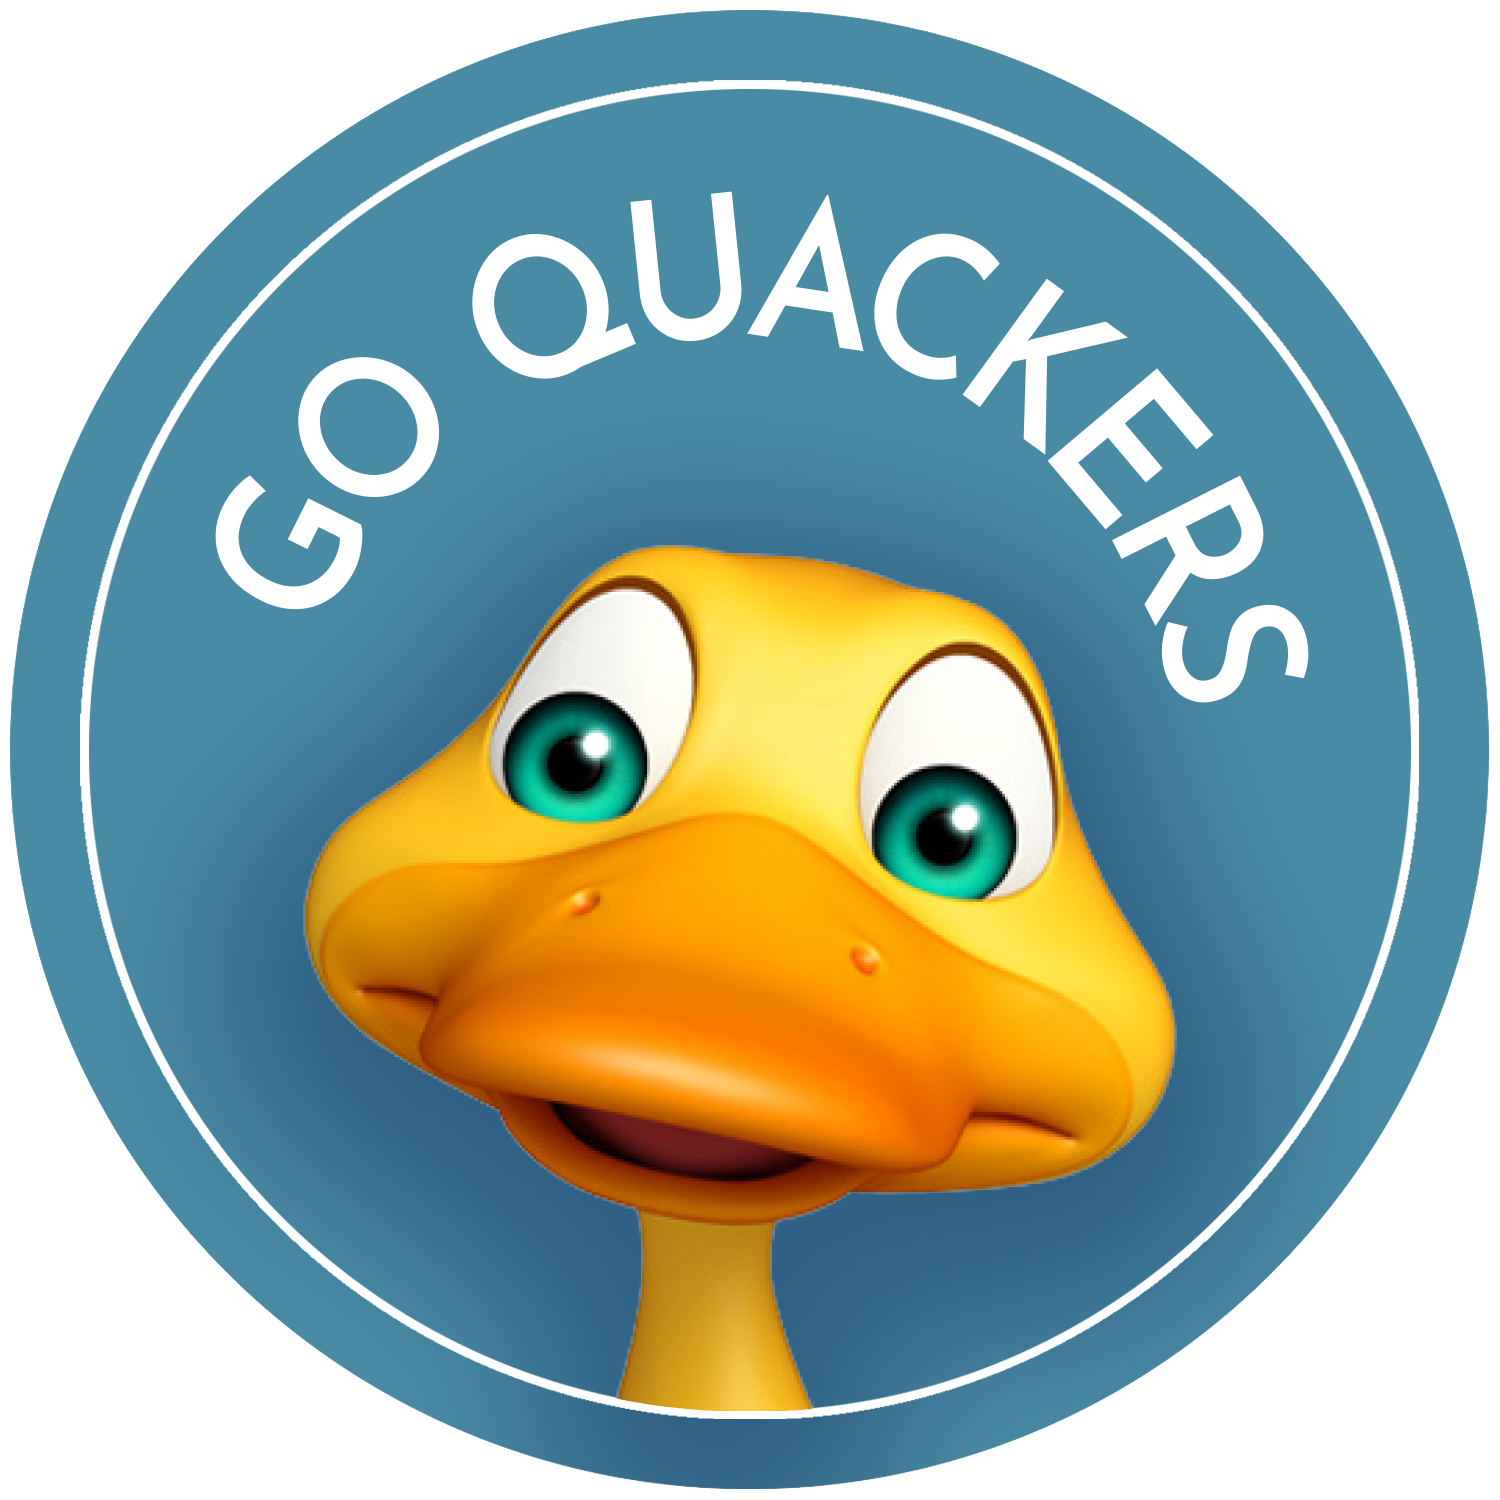 GO QUACKERS